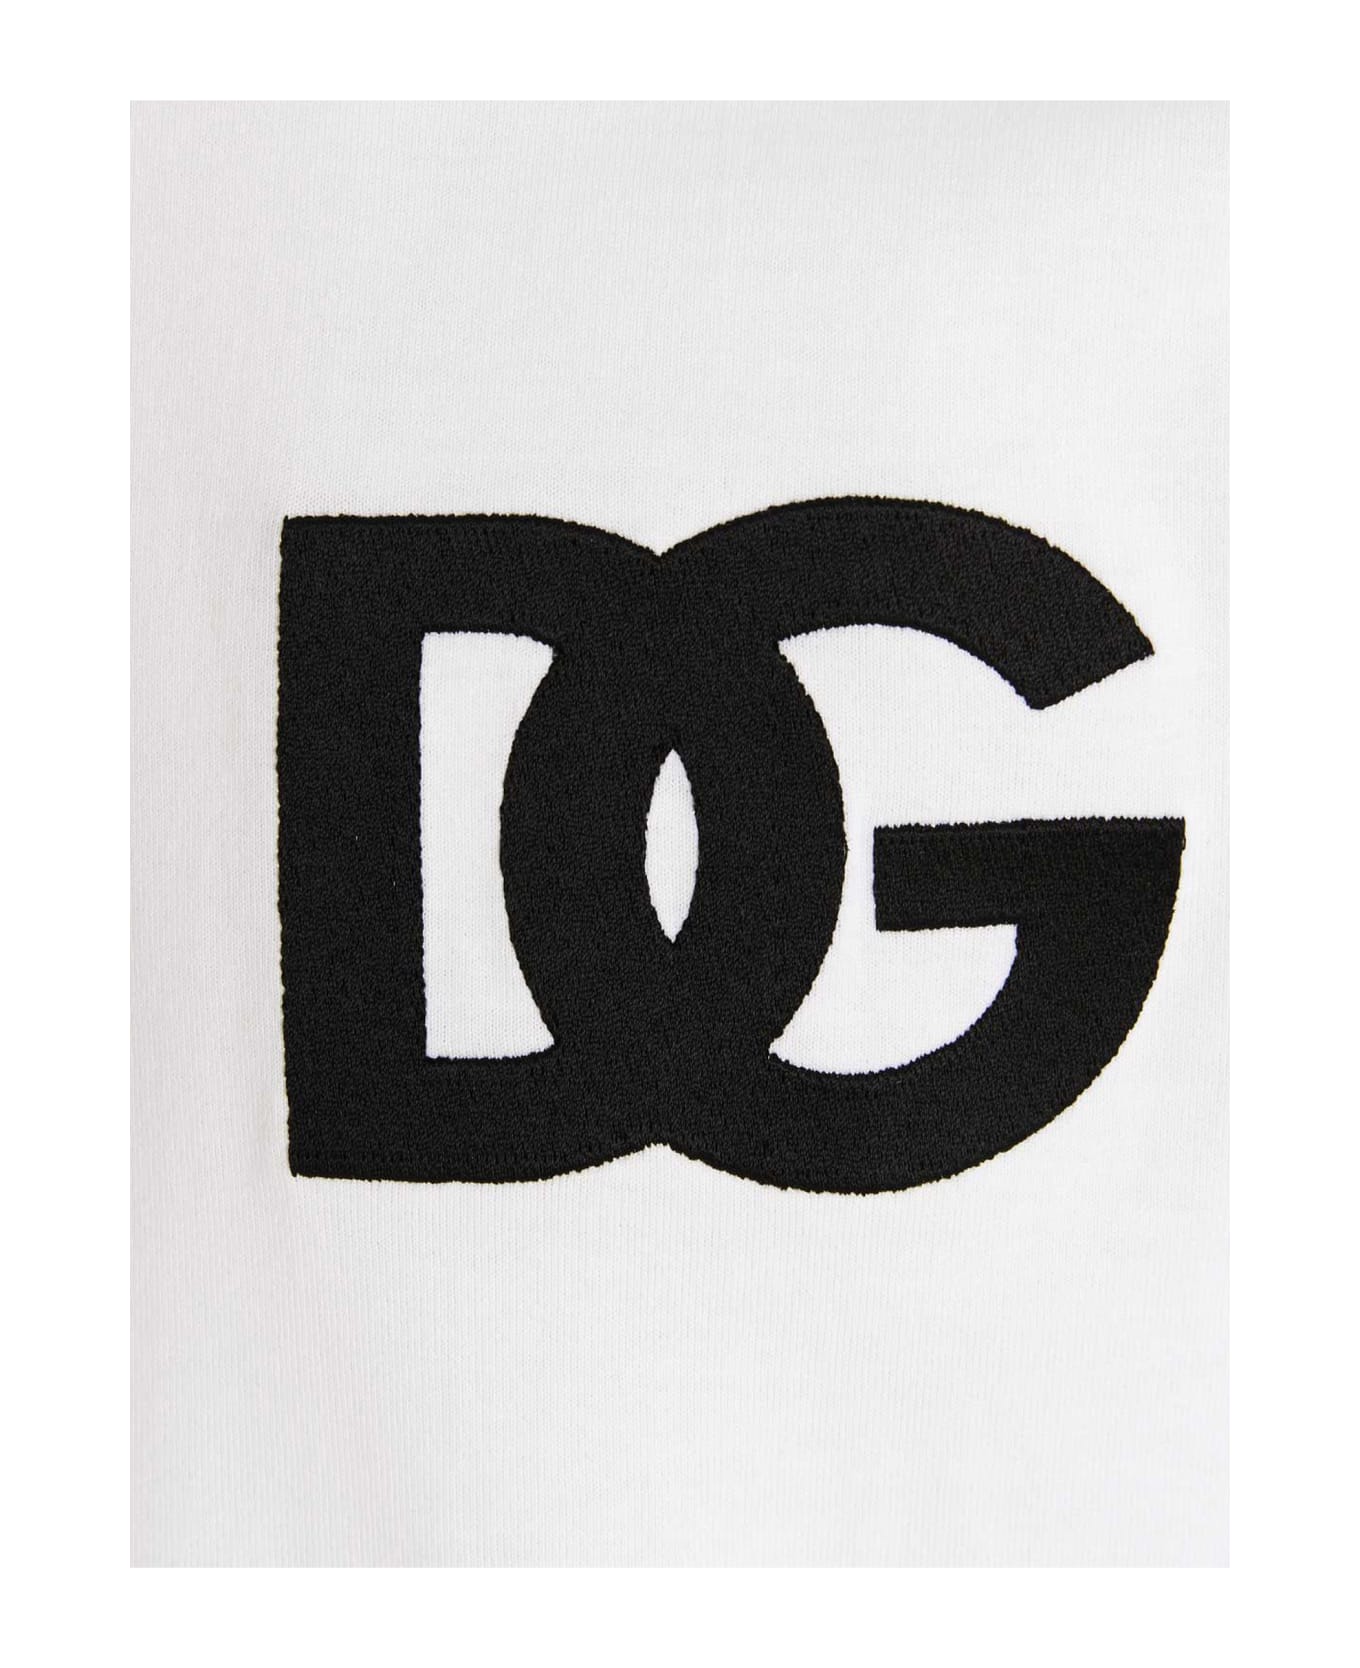 Dolce & Gabbana T-shirt 'black Sicily' - Bianco